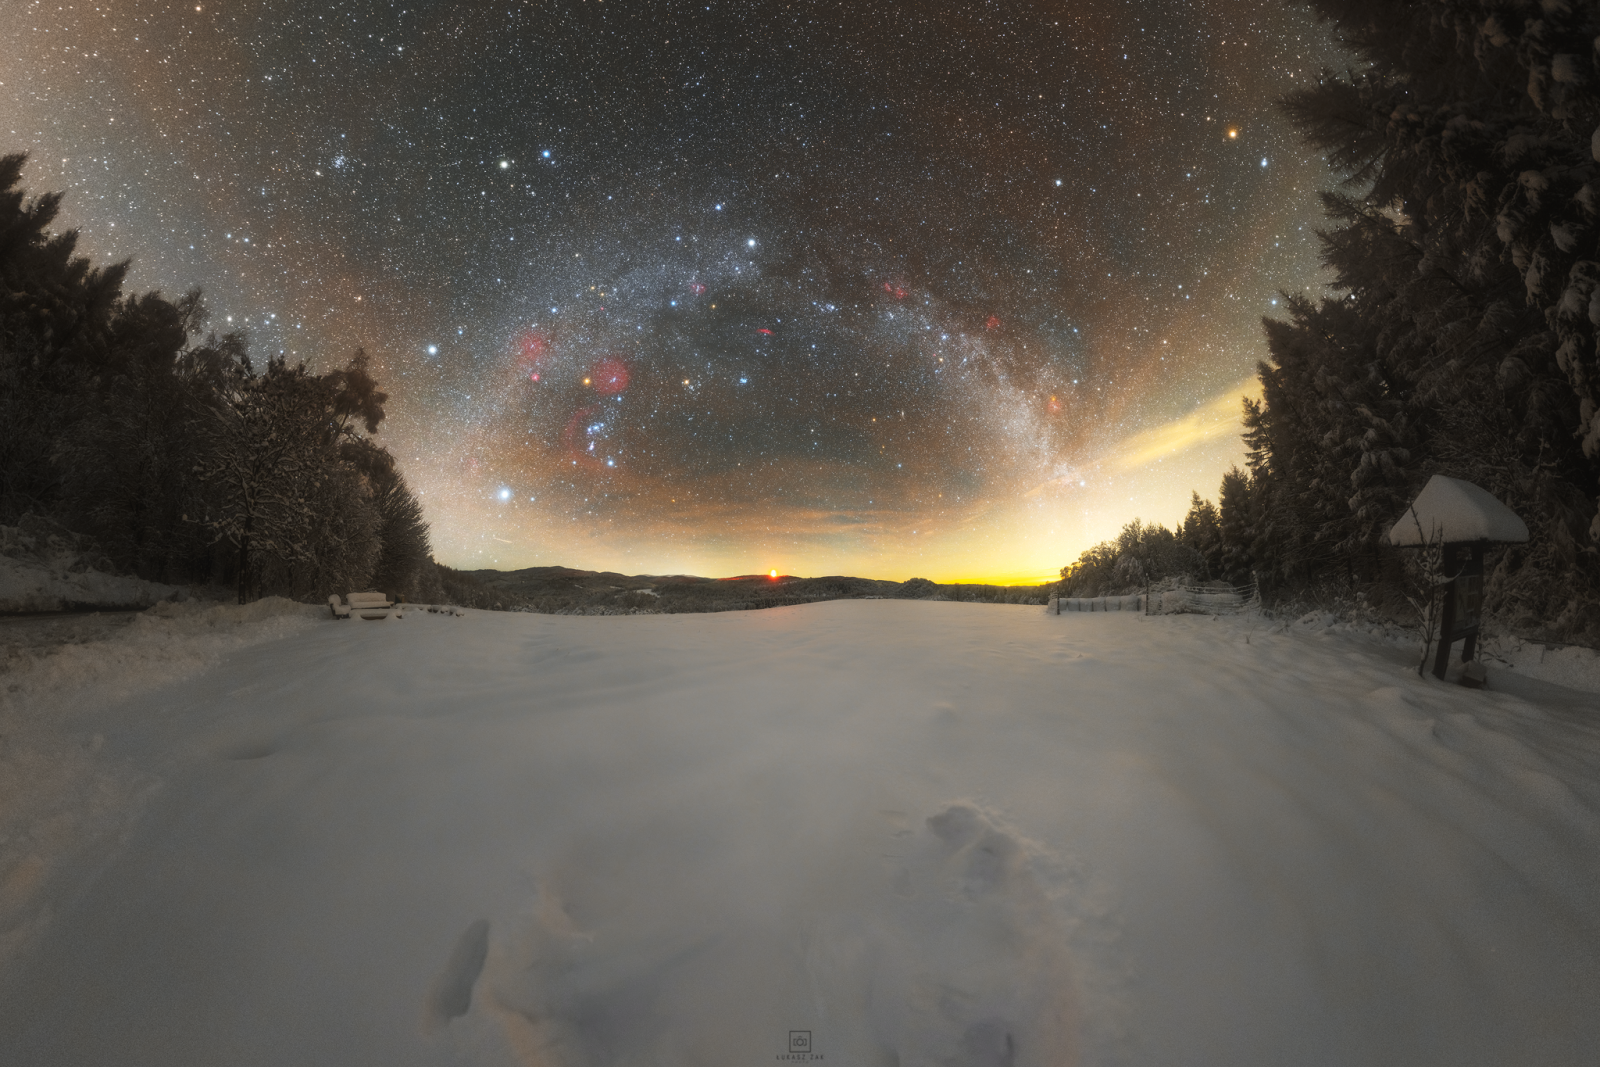 Zatwarnica_panorama_04_12_2021_winter_sky.thumb.png.4975c38c30bf60a0f34b8d34897f5636.png